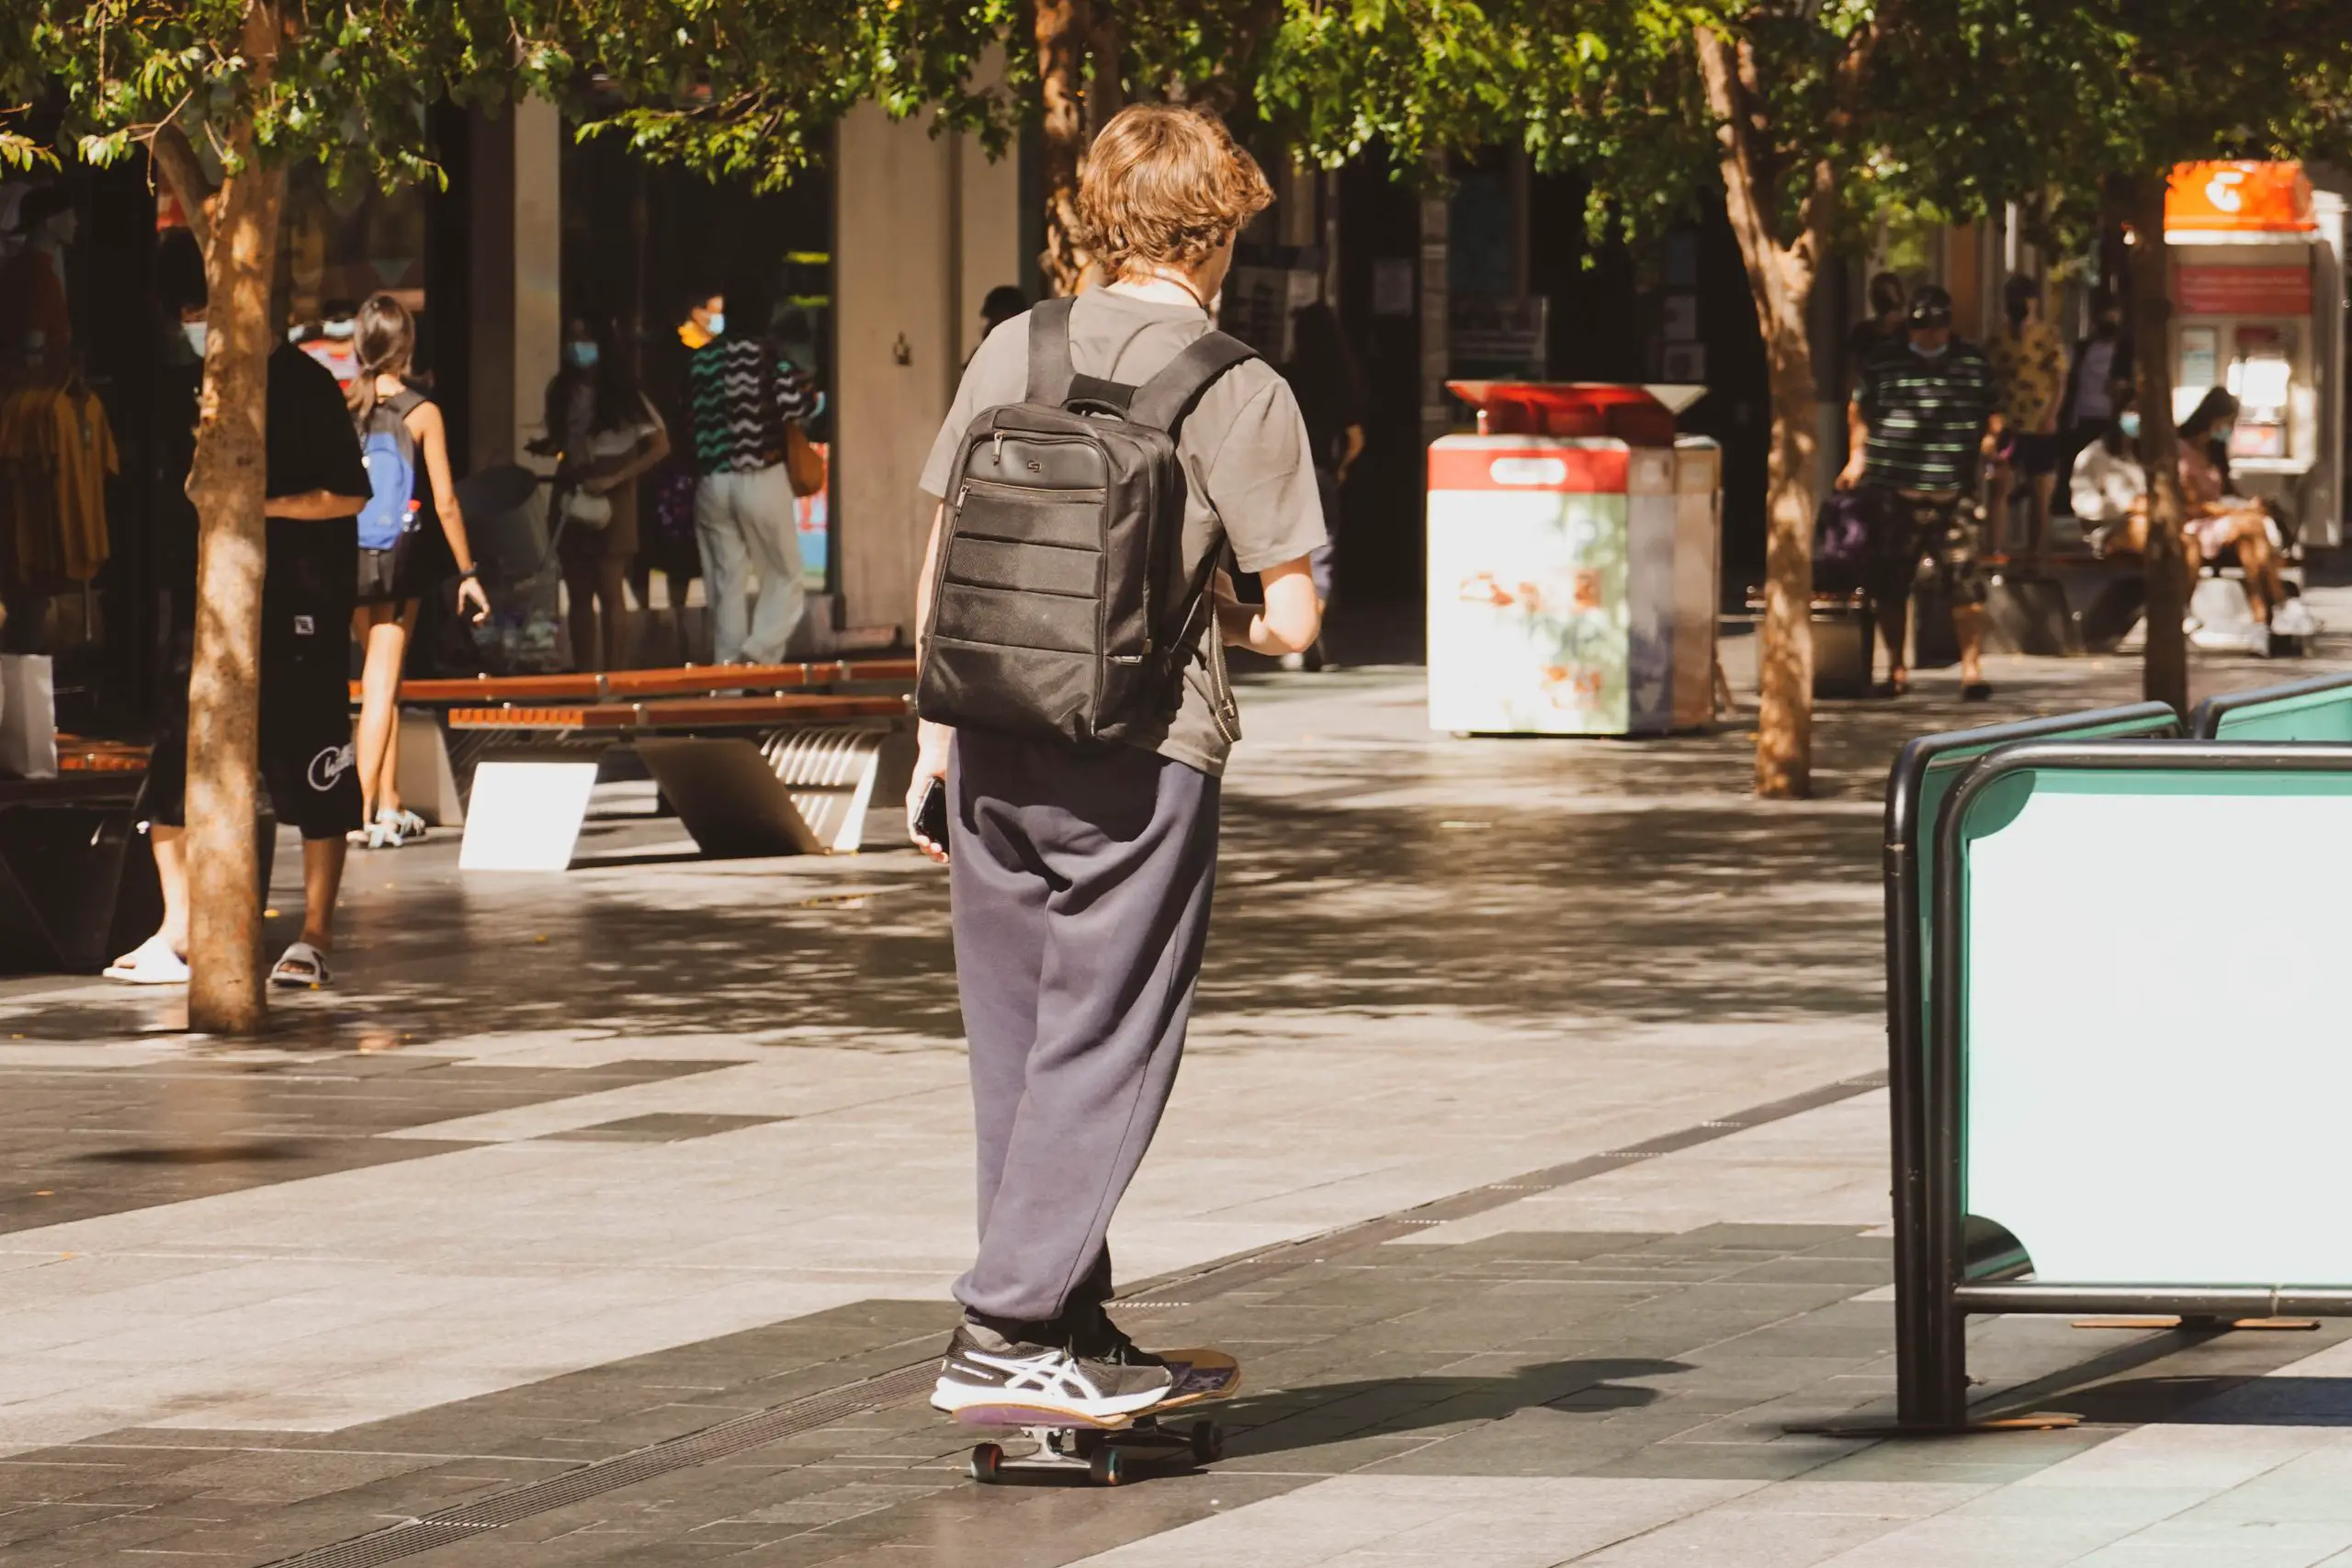 Image of a skateboarder with a black backpack skateboarding on the street. Source: unsplash